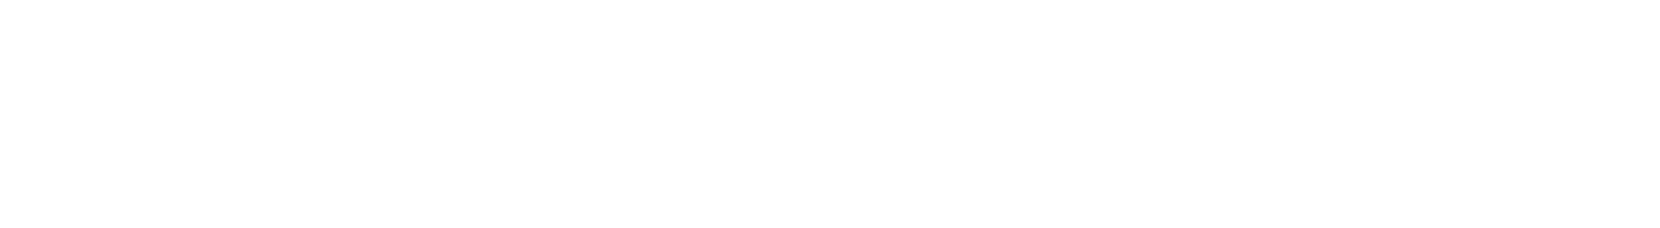 CU Xpress Lease white logo Credit Union Leasing